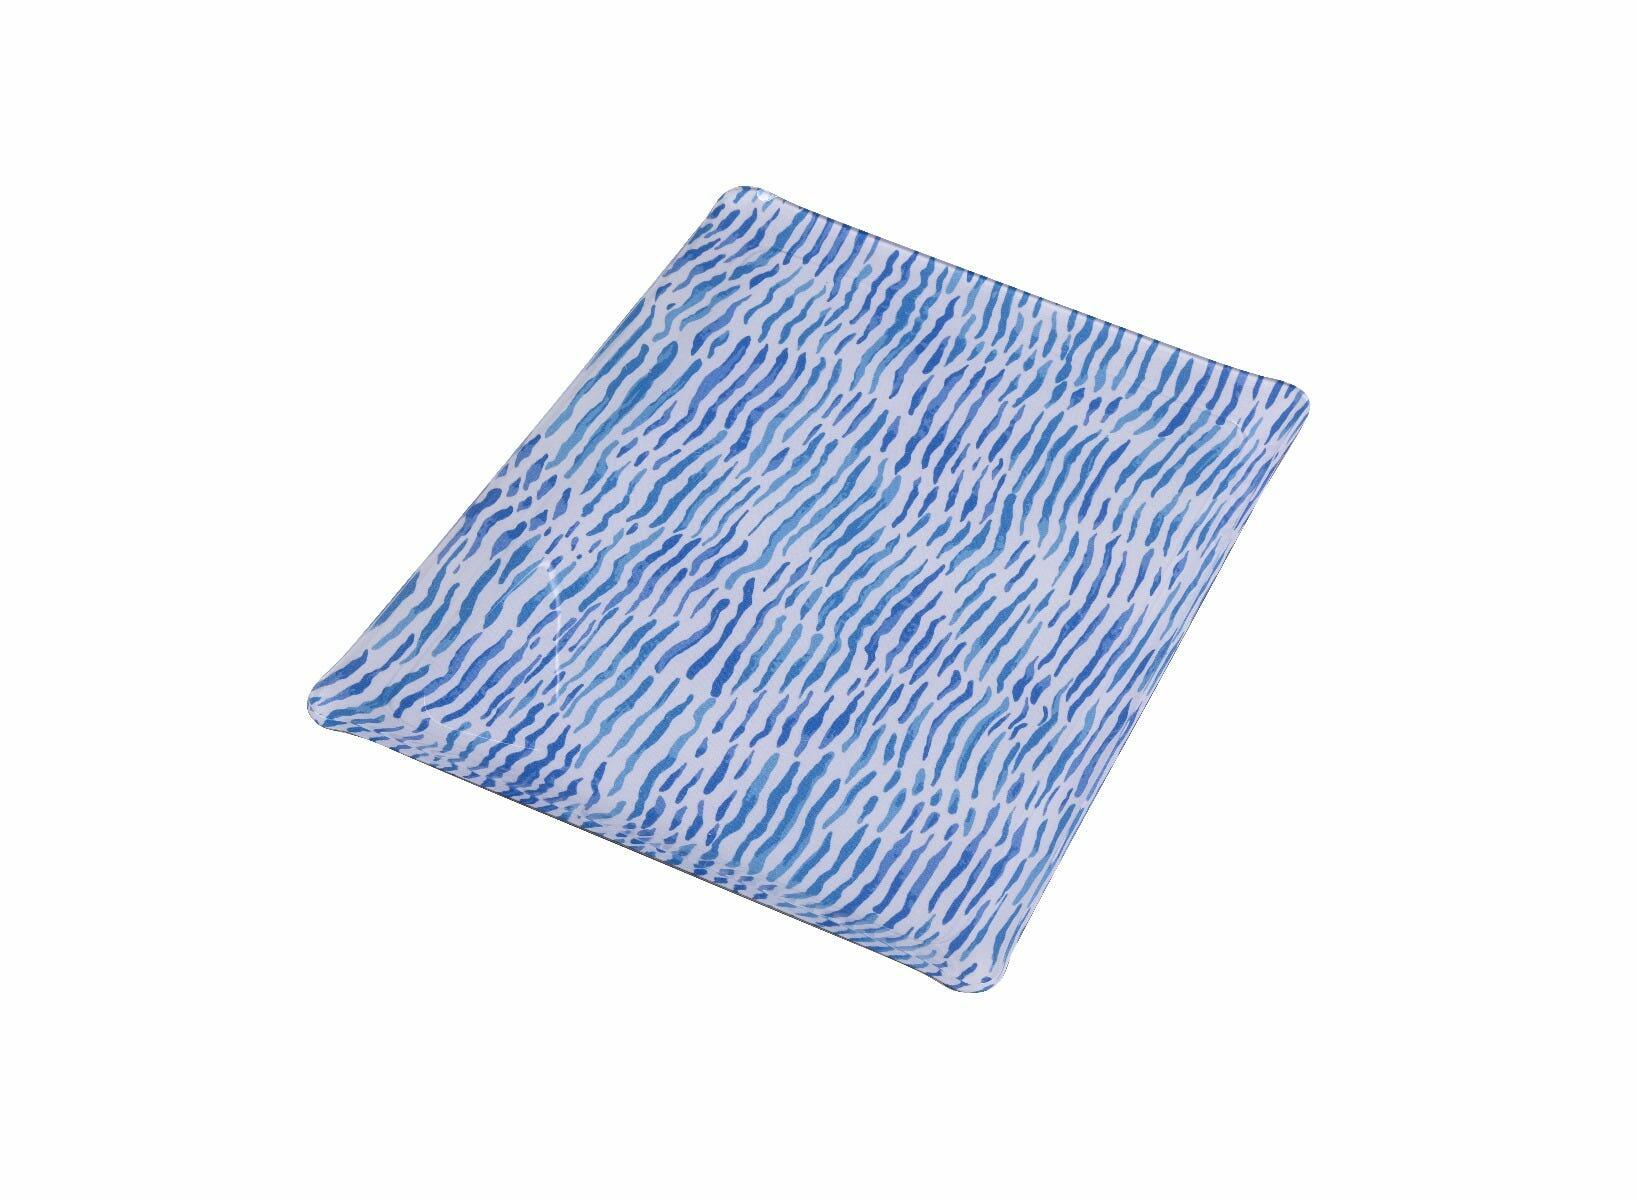 Fortnum & Mason Nina Campbell Arles Fabric Serving Tray, Blue